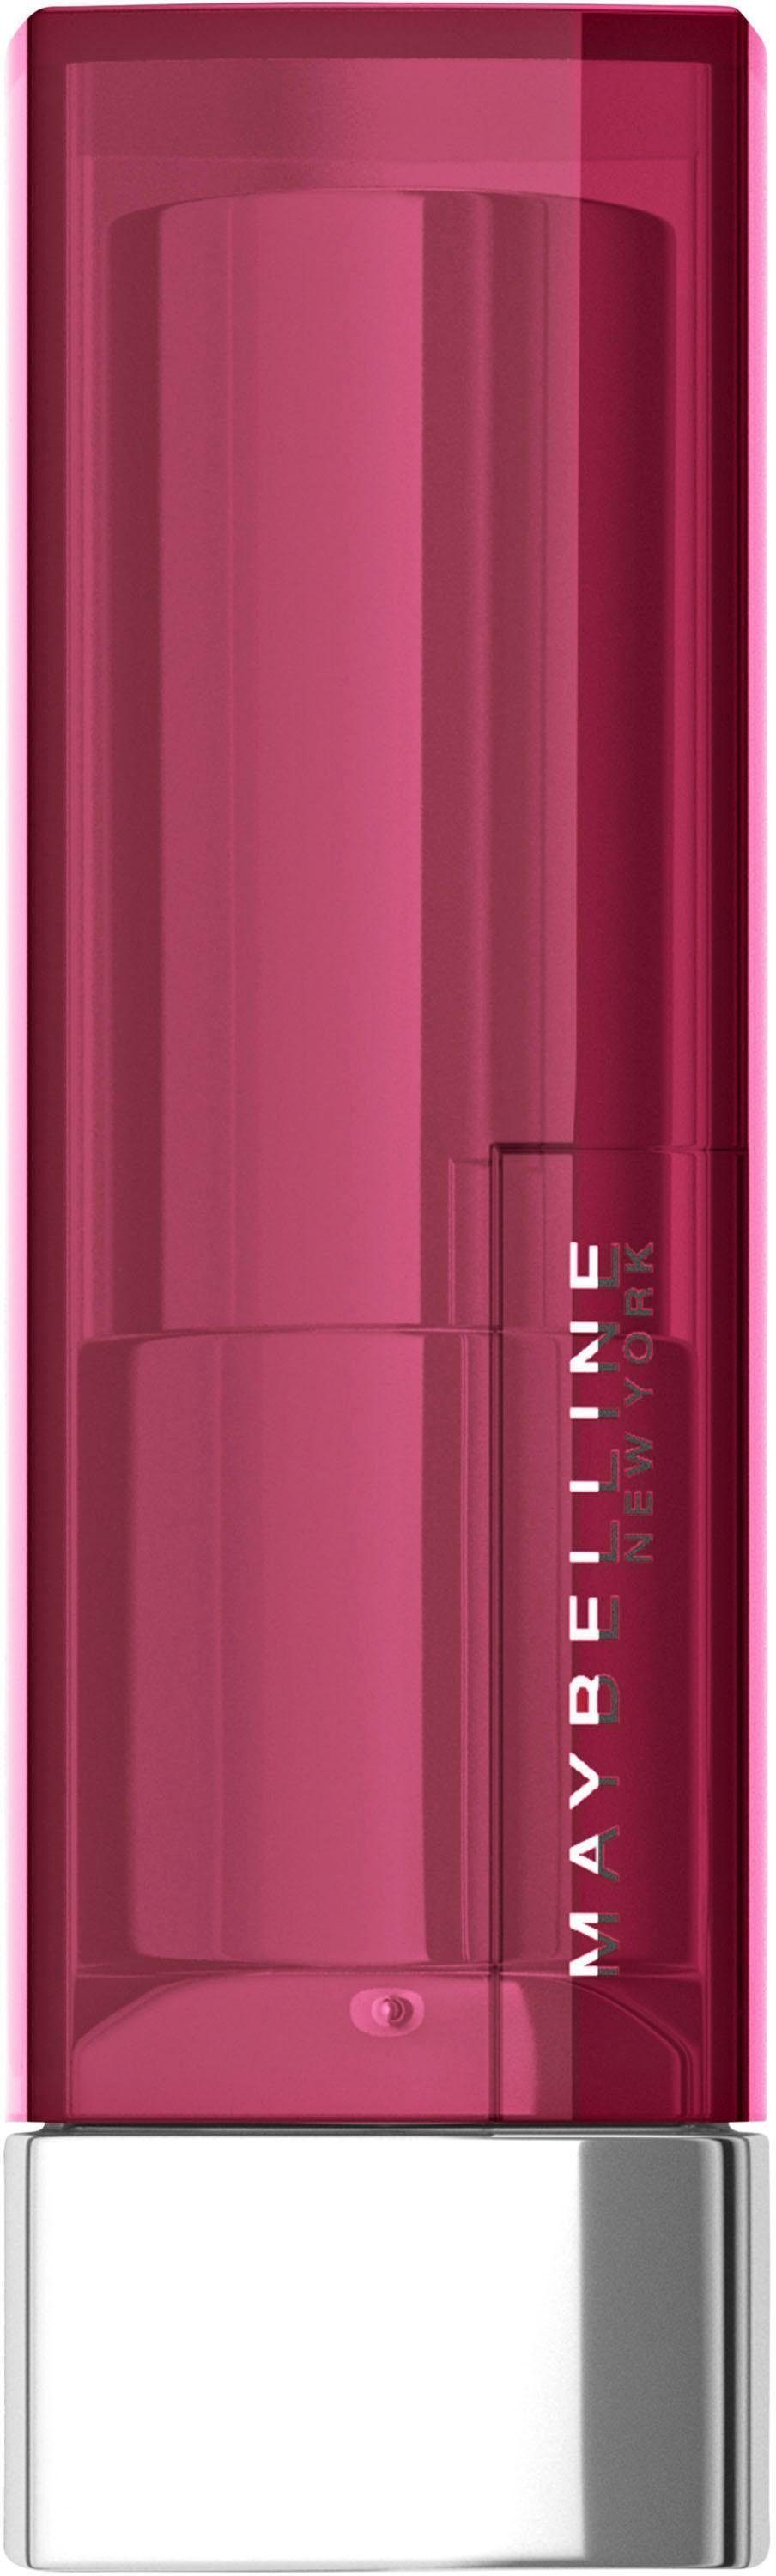 NEW Risk Lippenstift YORK MAYBELLINE the Sensational 211 Rosey Creams Color